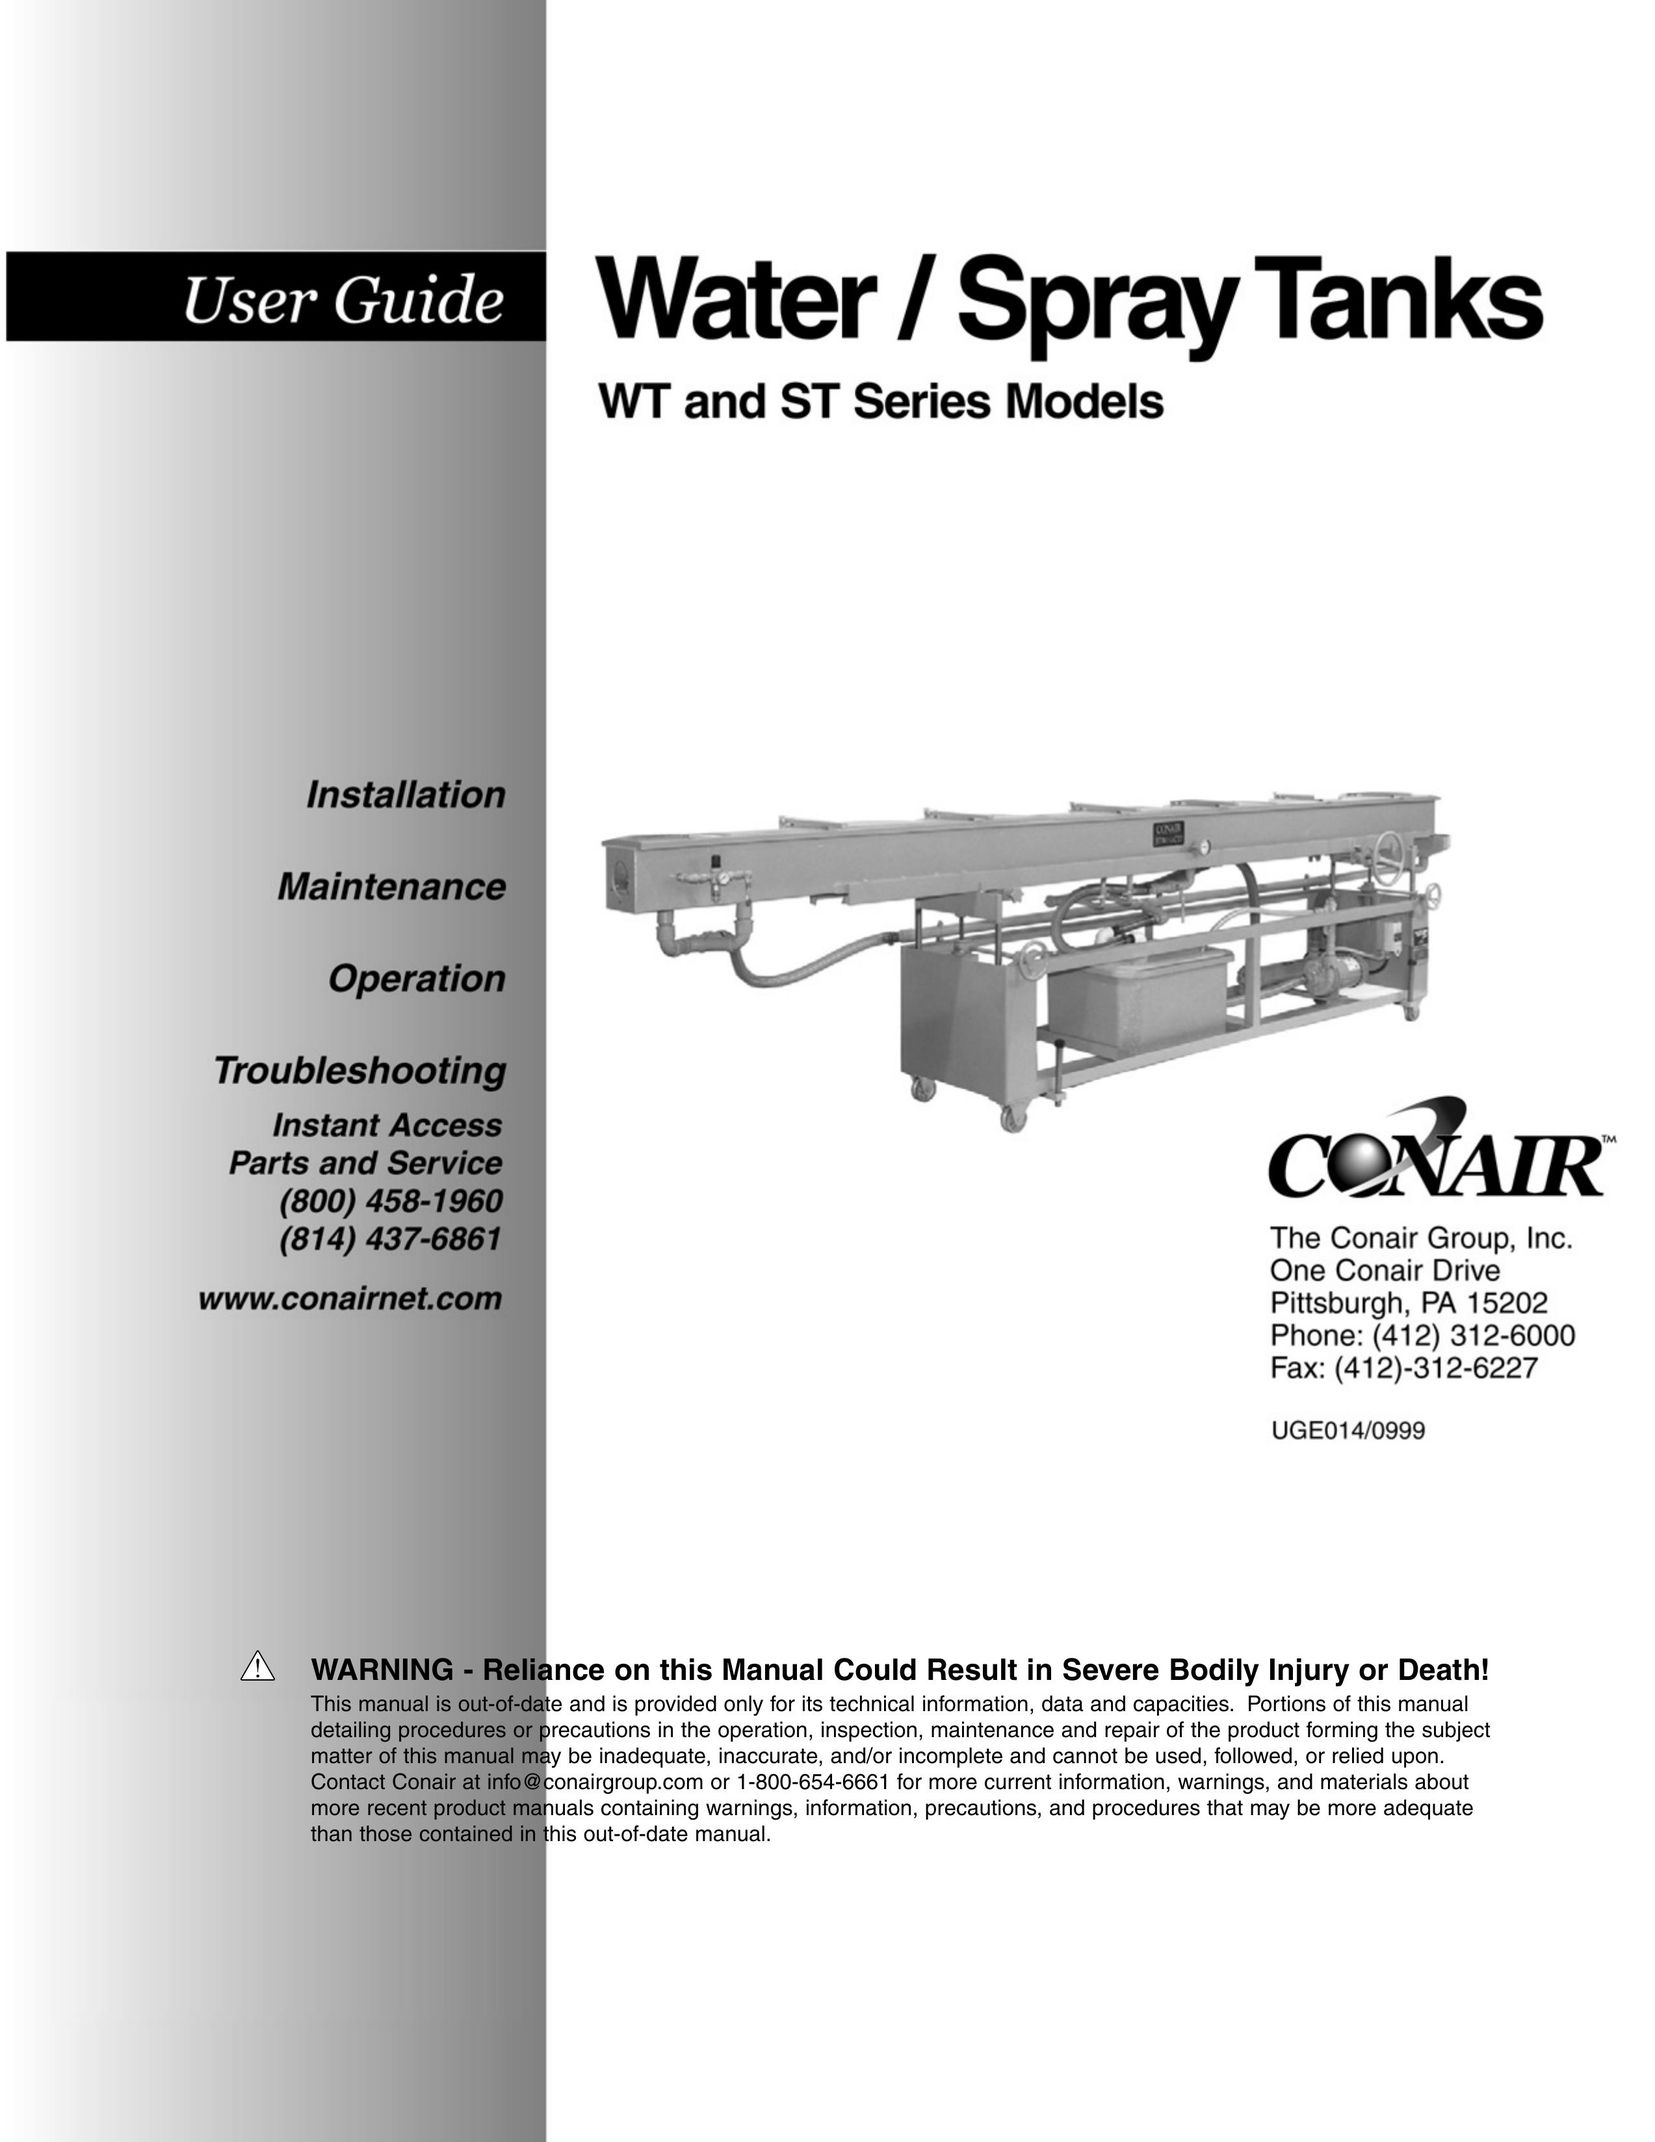 Conair Water/Spray Tanks Water System User Manual